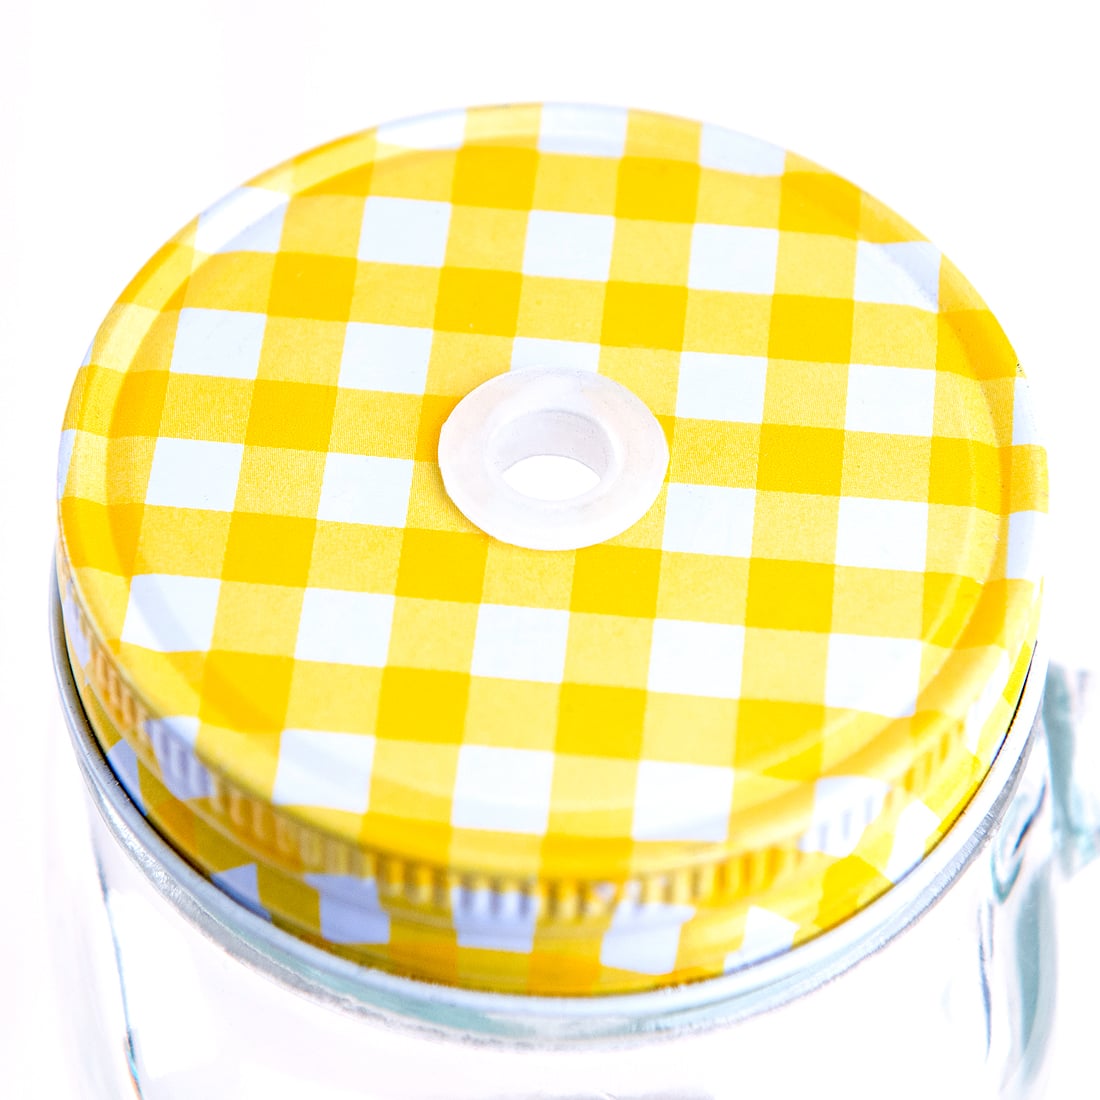 Крышка для банки Yellow Check, 7,5 см, Металл, Mason Jar, США